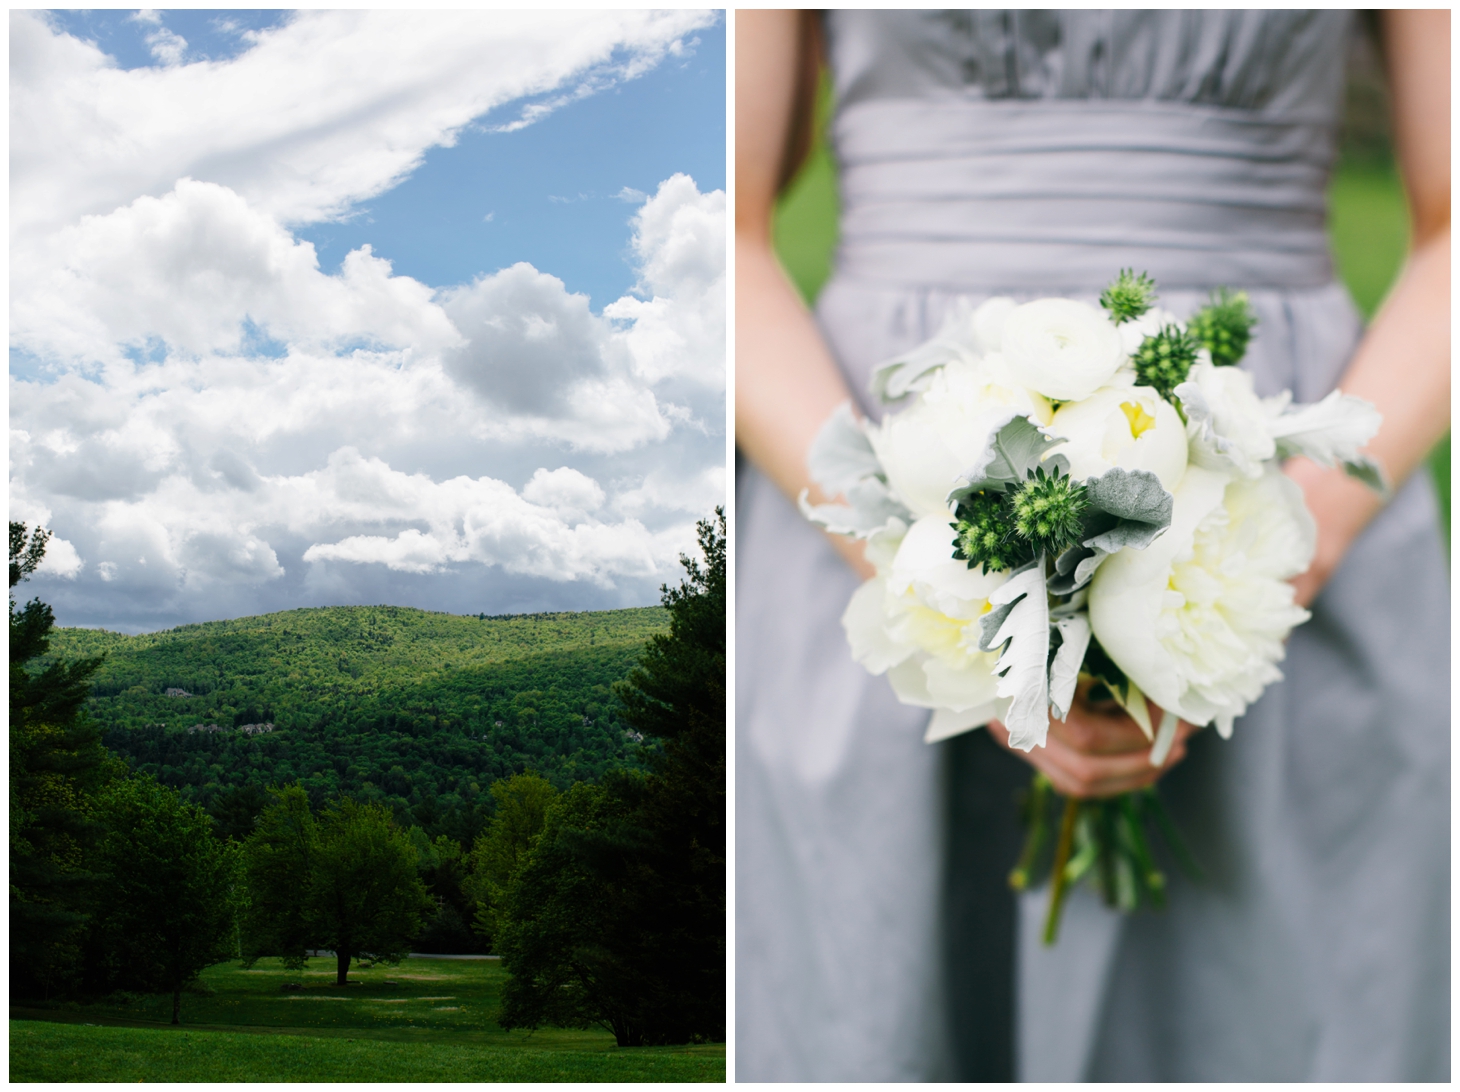 Kris & Christine's Mountain-Inspired Vermont Lodge Wedding - by Sarah Bradshaw Photography_0037